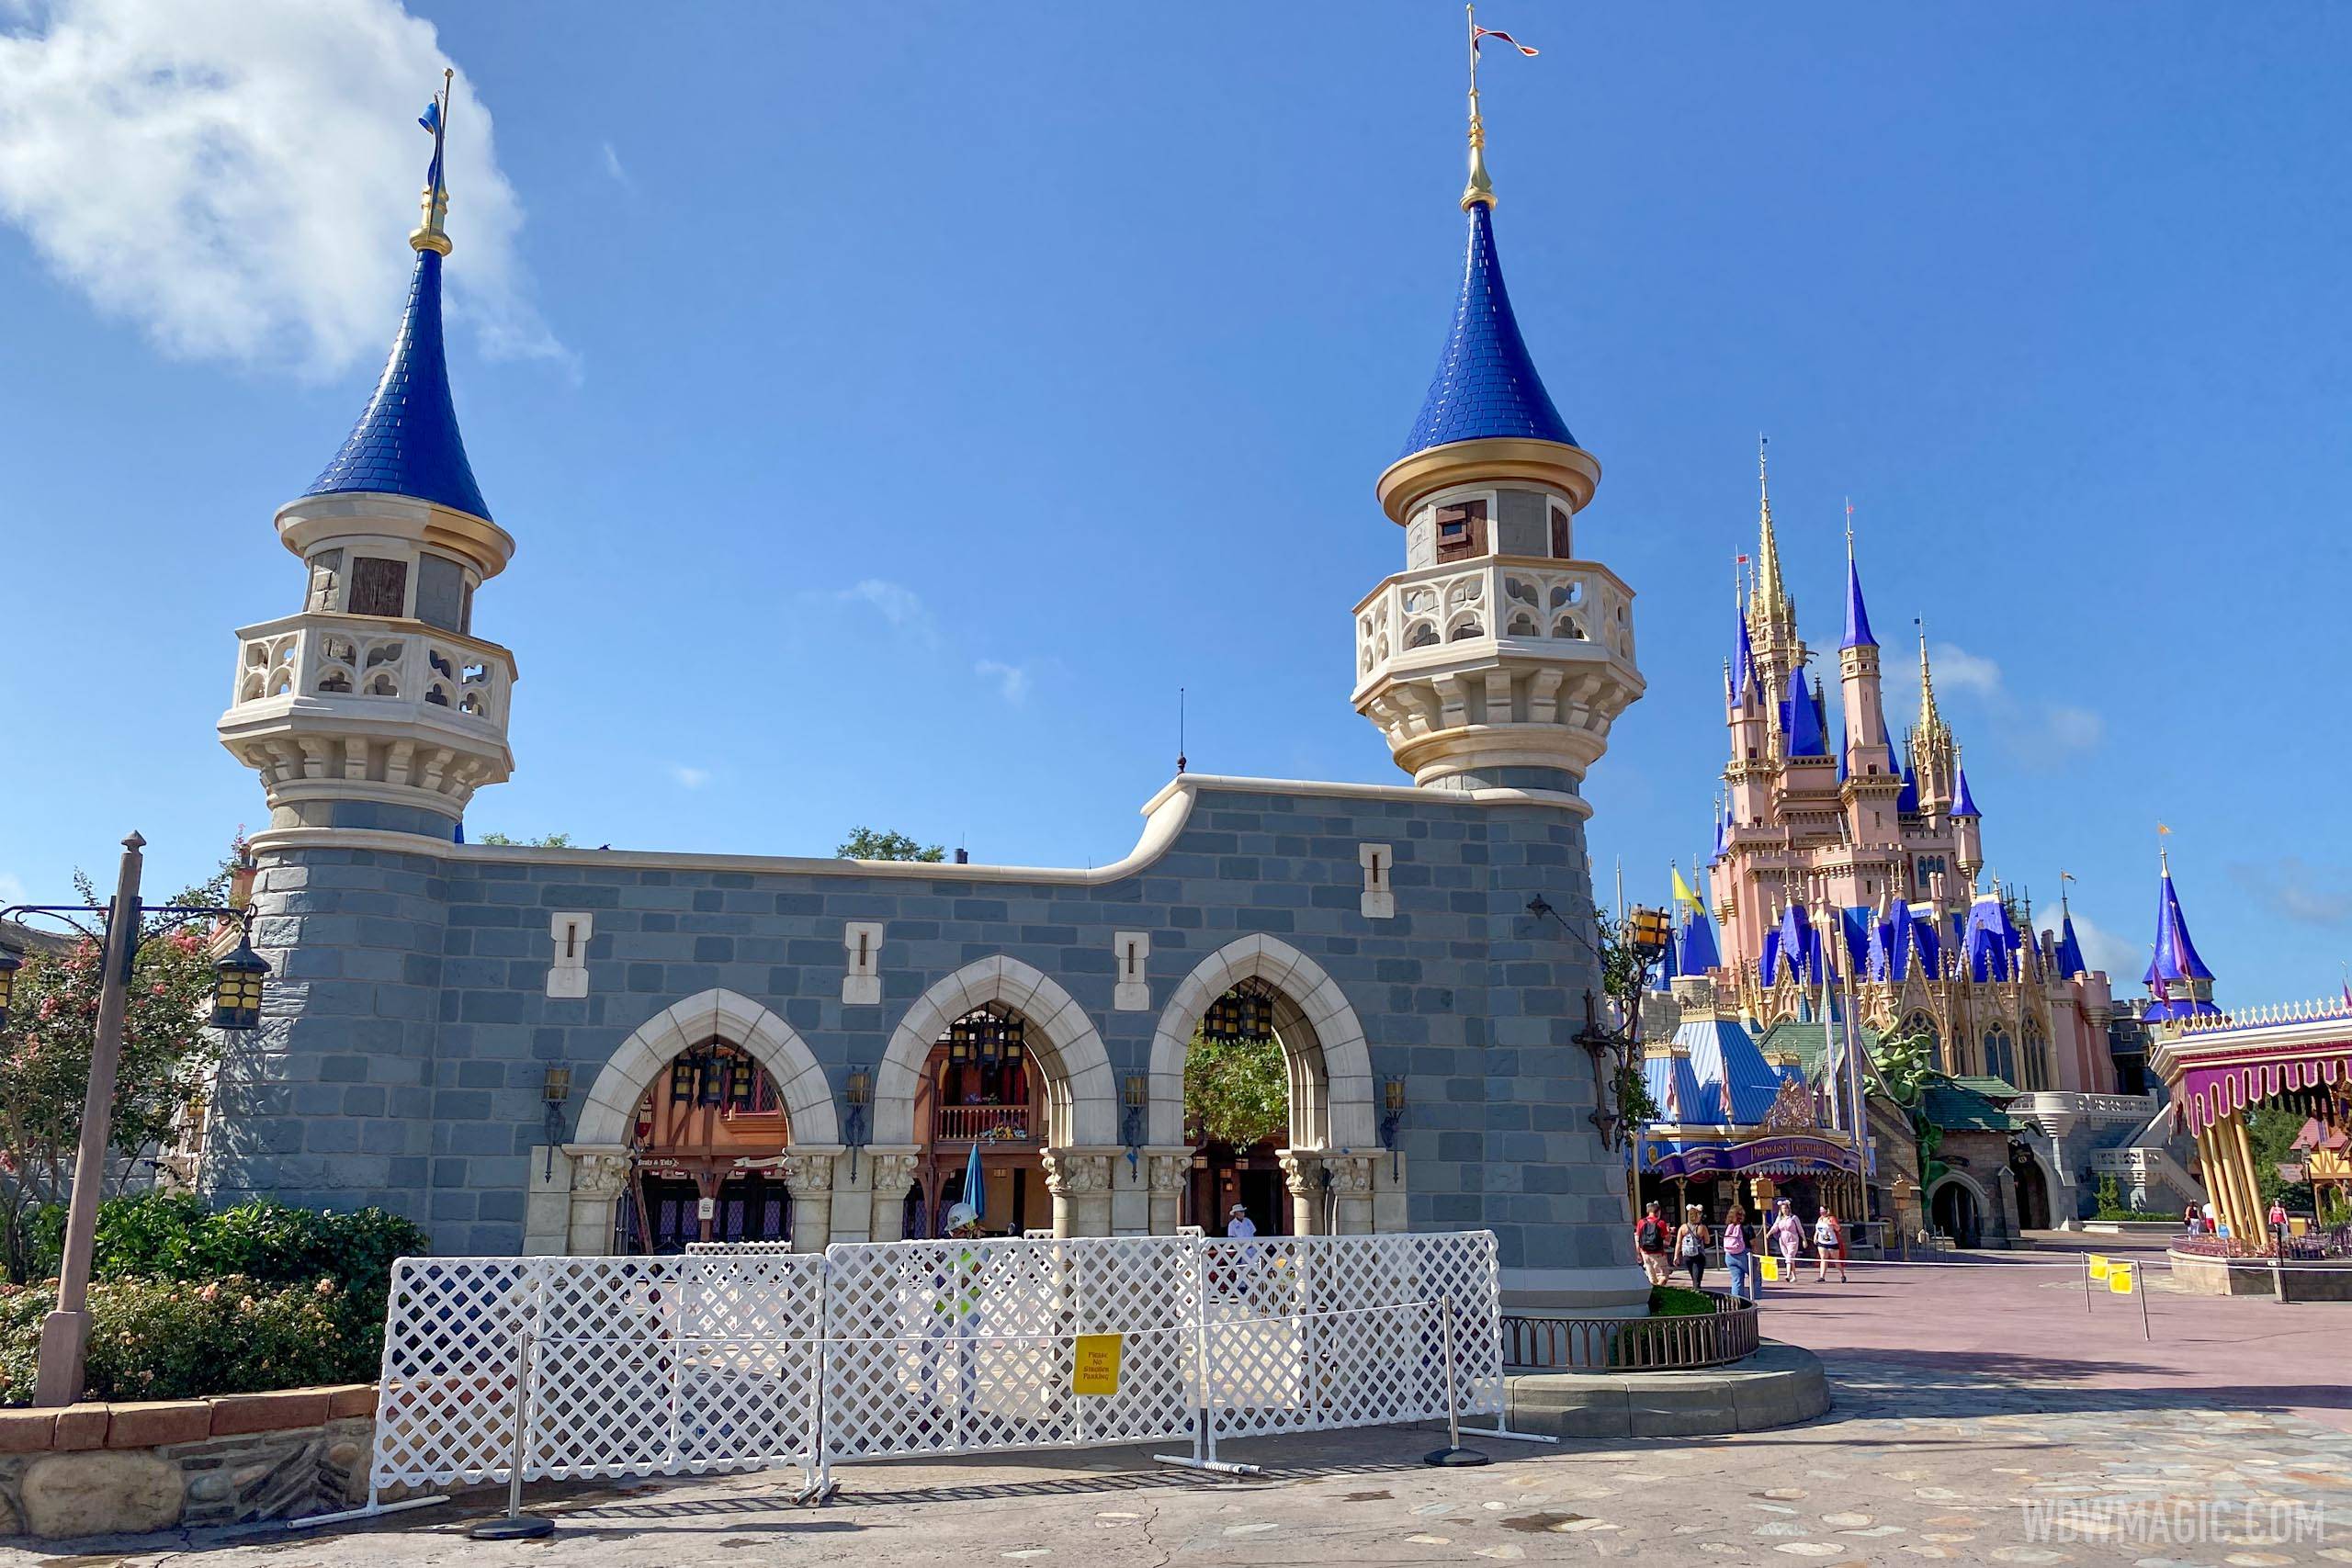 Cinderella Castle repainting - July 7 2020